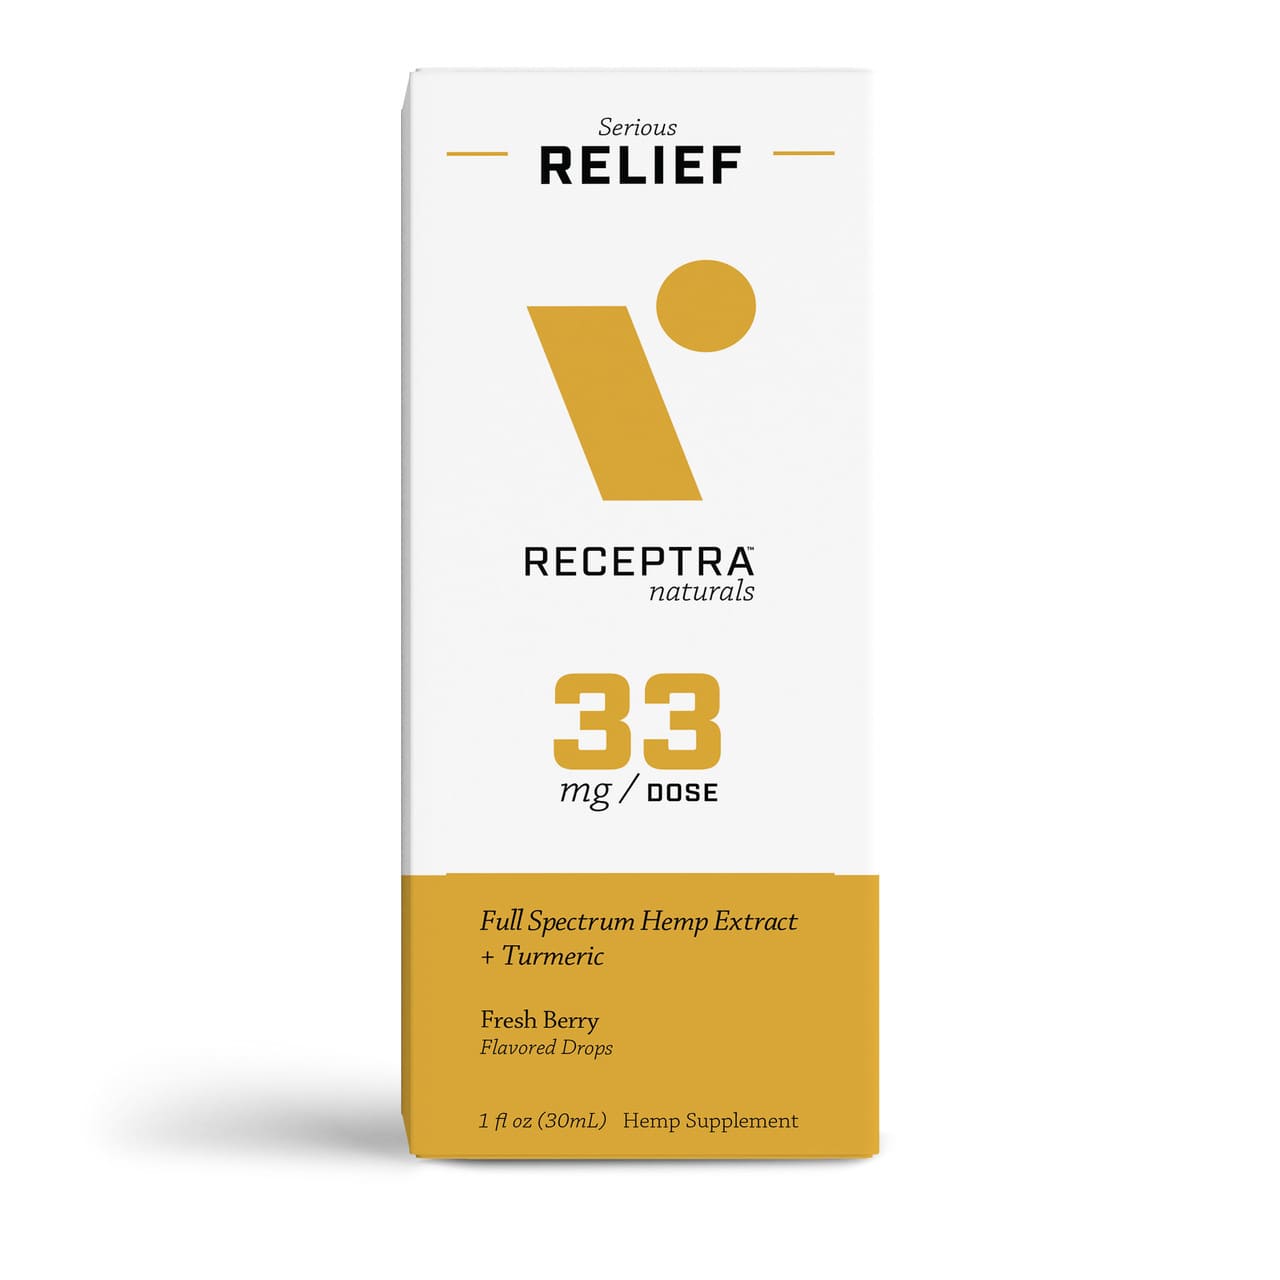 Receptra Serious Relief + Turmeric Tincture 33mg/dose image6